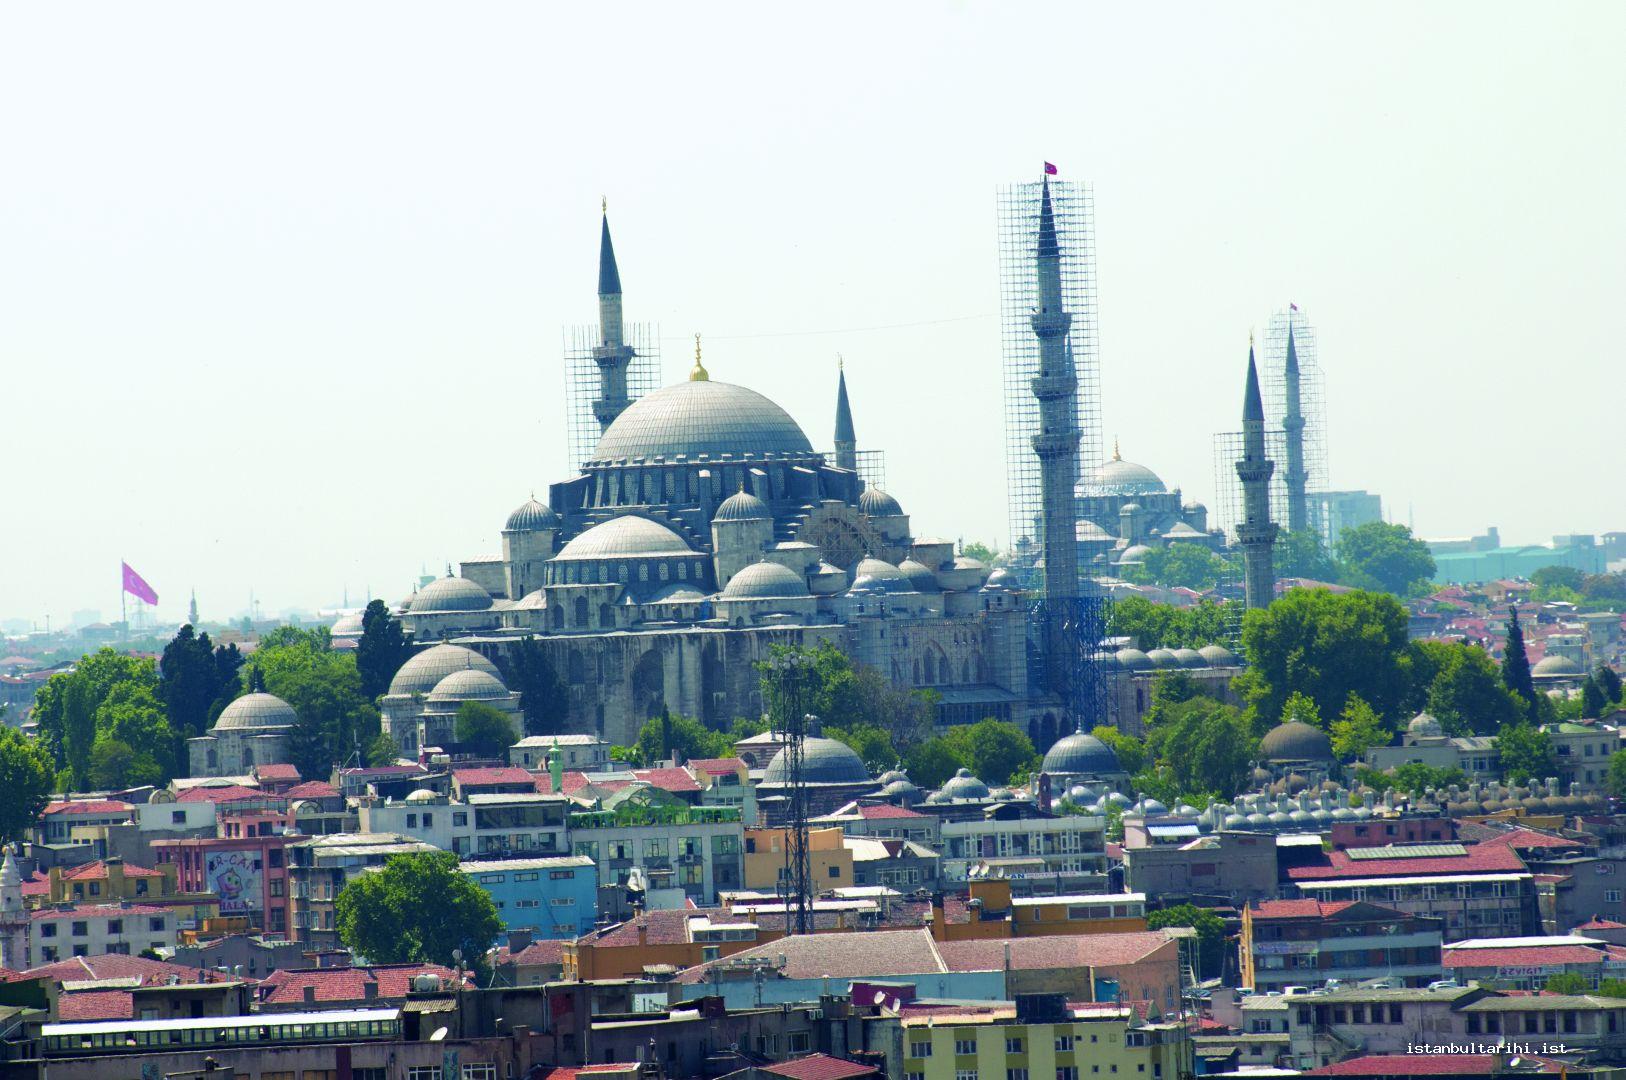 4- Süleymaniye Mosque (2009)